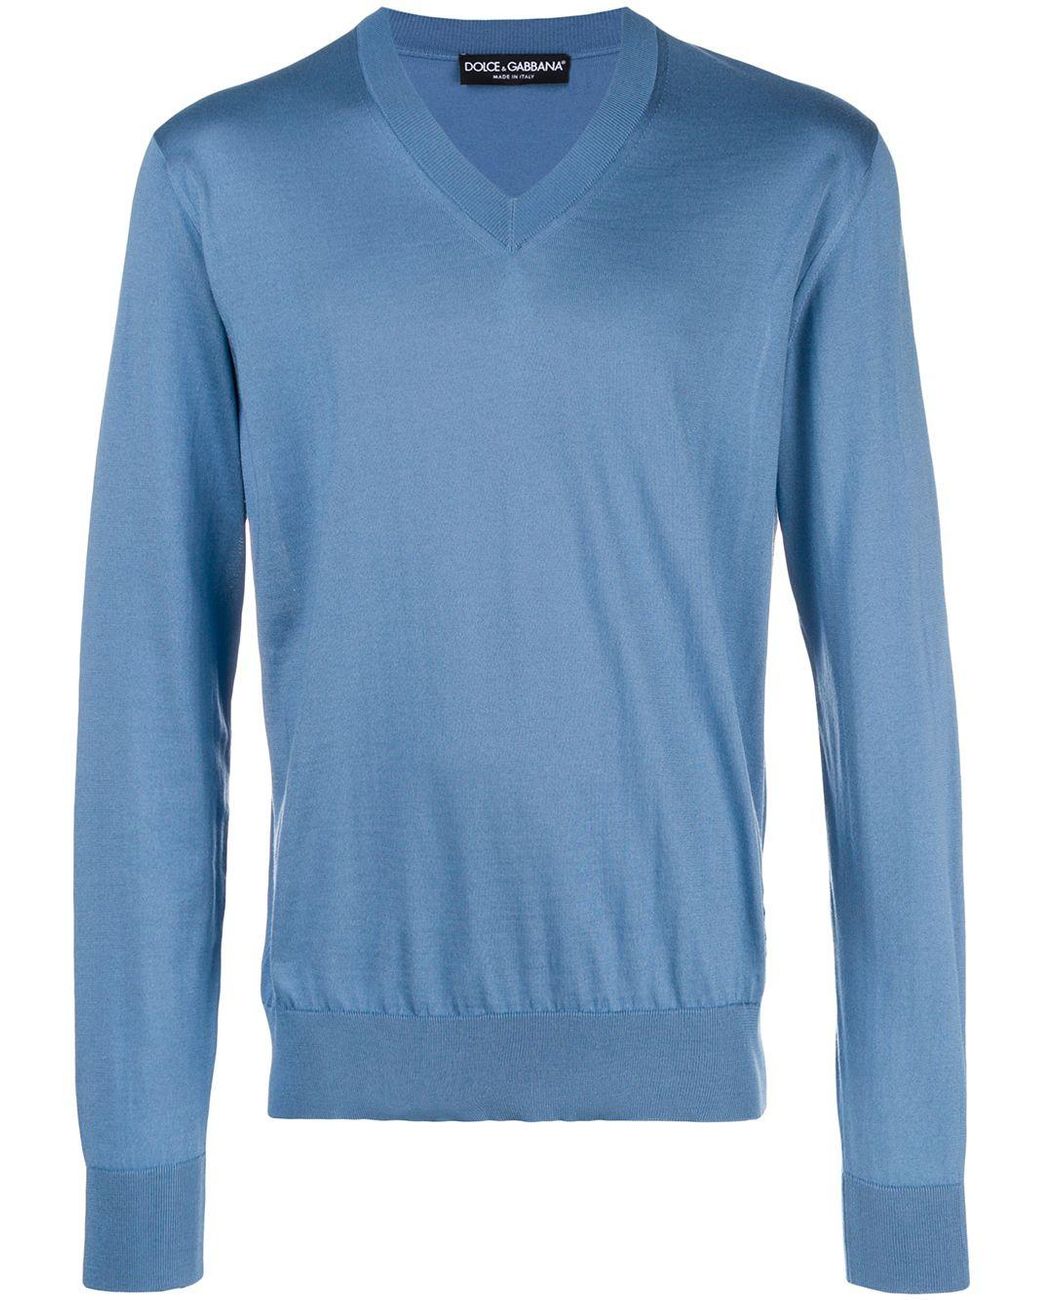 Dolce & Gabbana Silk V-neck Sweater in Blue for Men - Lyst